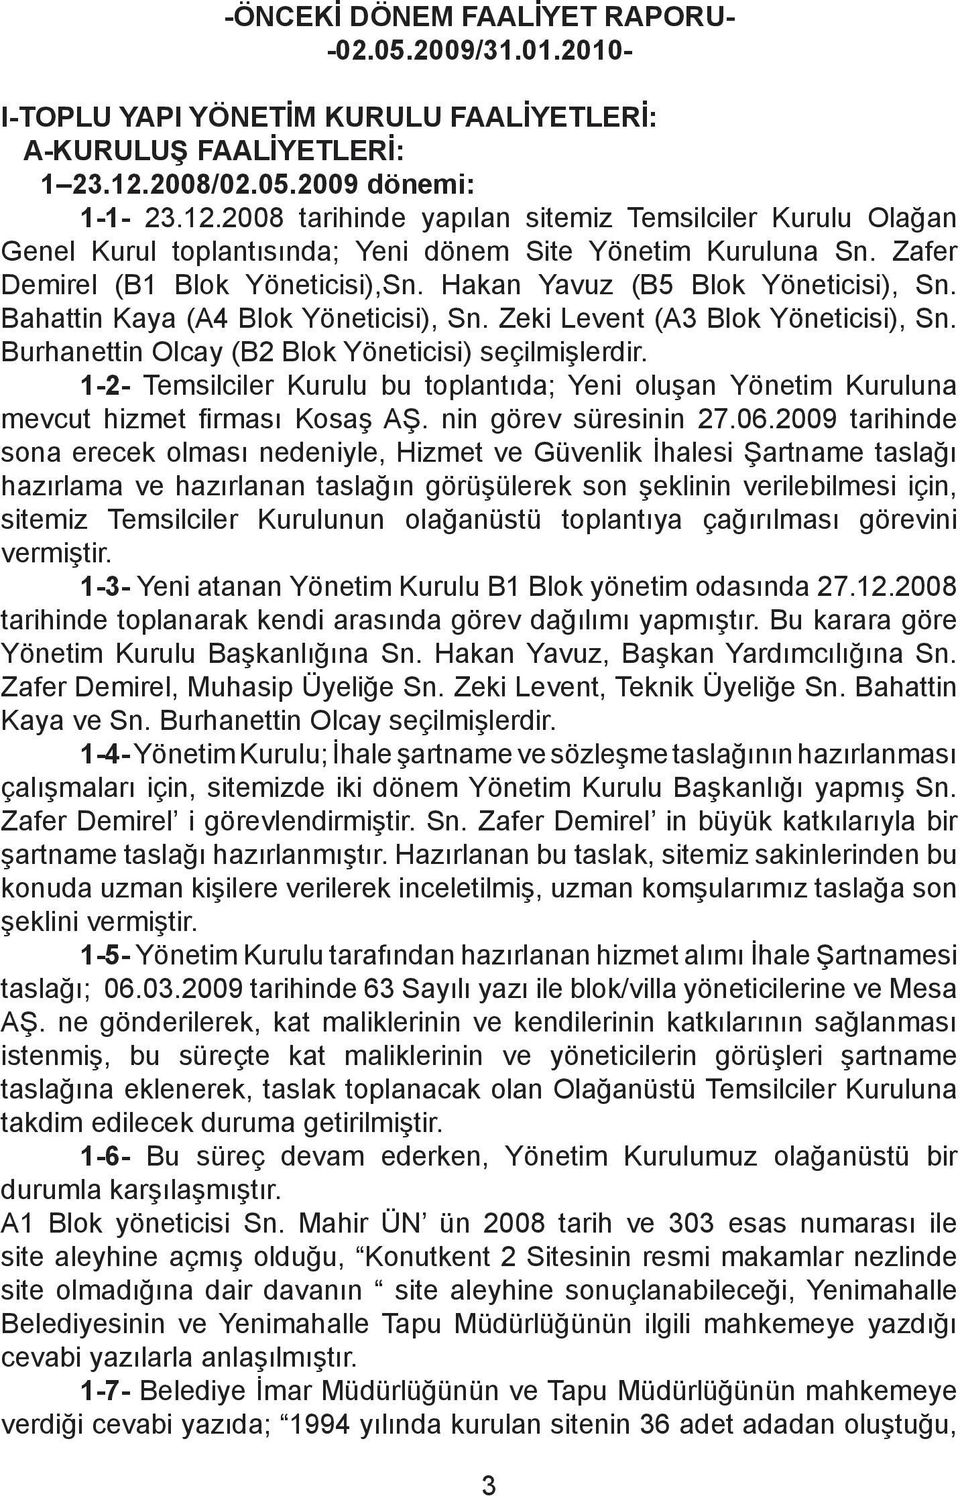 Hakan Yavuz (B5 Blok Yöneticisi), Sn. Bahattin Kaya (A4 Blok Yöneticisi), Sn. Zeki Levent (A3 Blok Yöneticisi), Sn. Burhanettin Olcay (B2 Blok Yöneticisi) seçilmişlerdir.